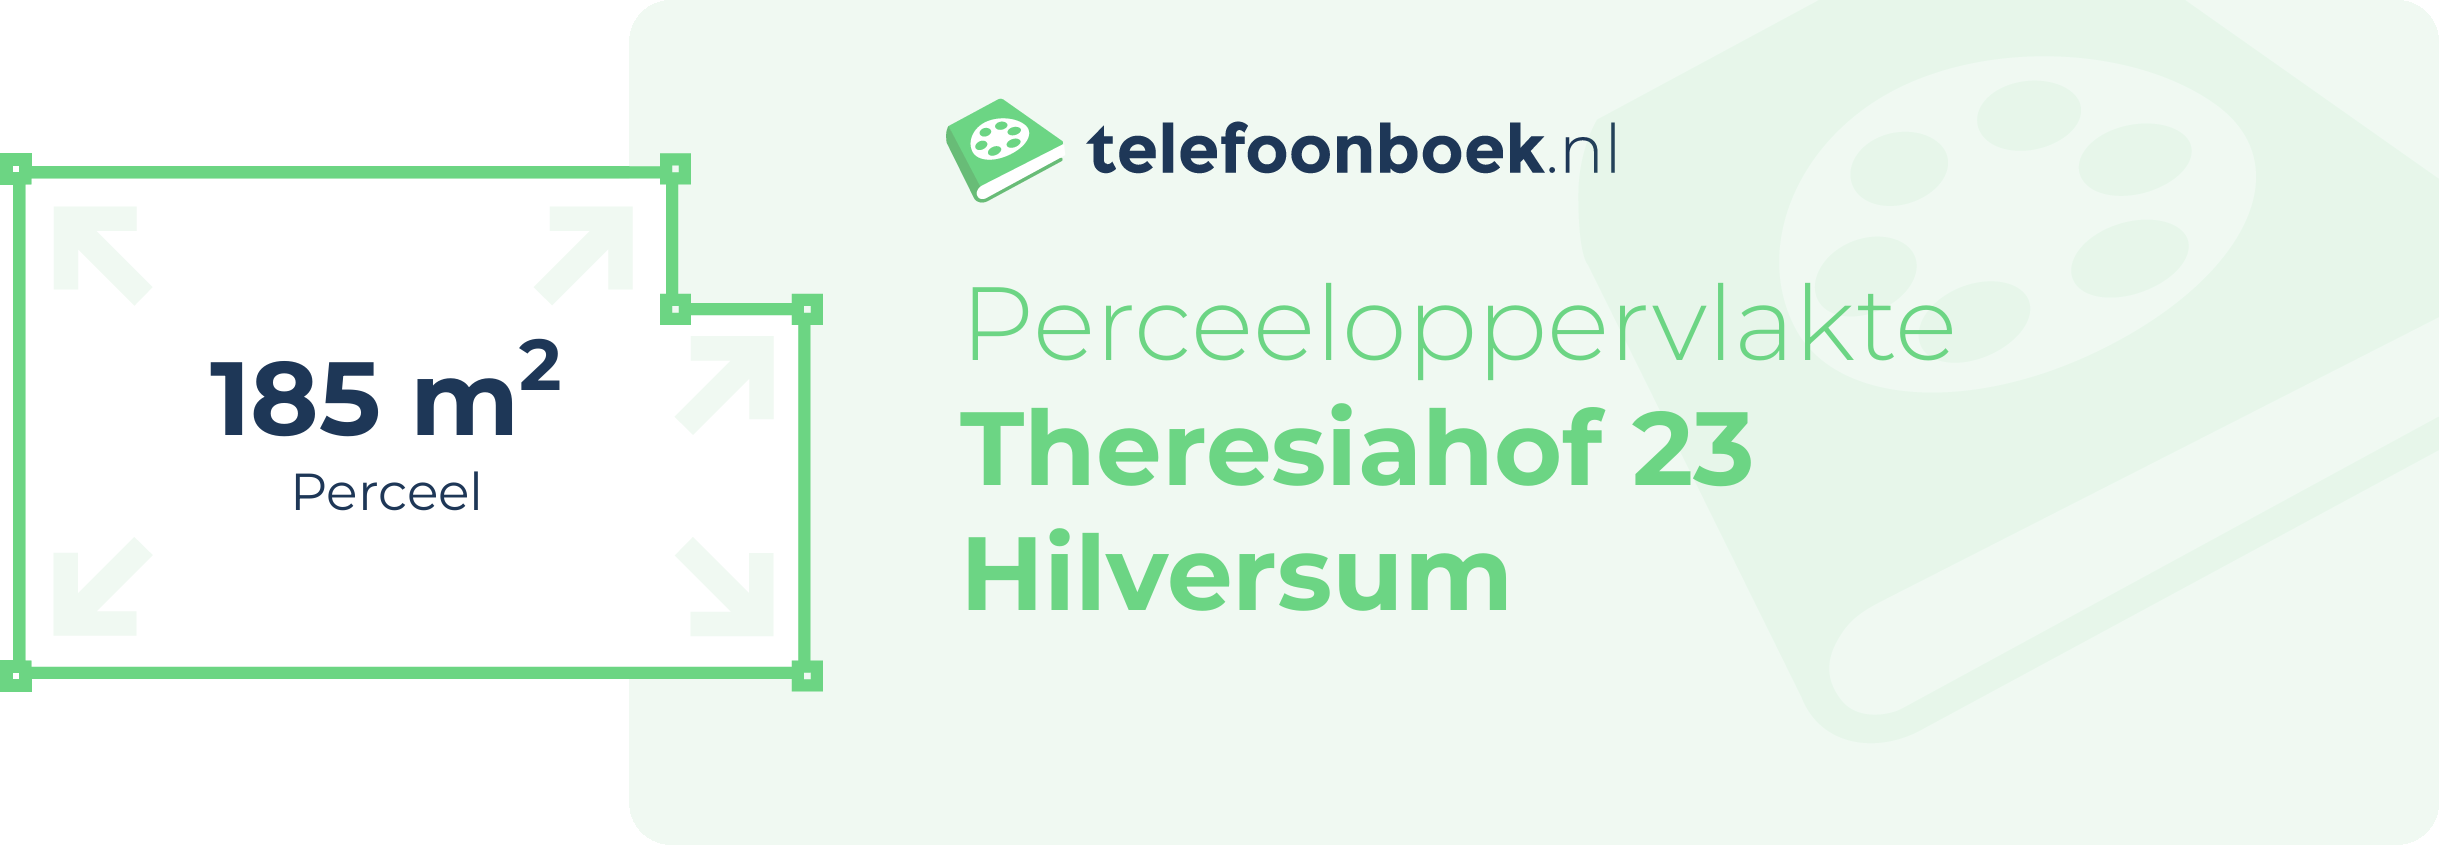 Perceeloppervlakte Theresiahof 23 Hilversum